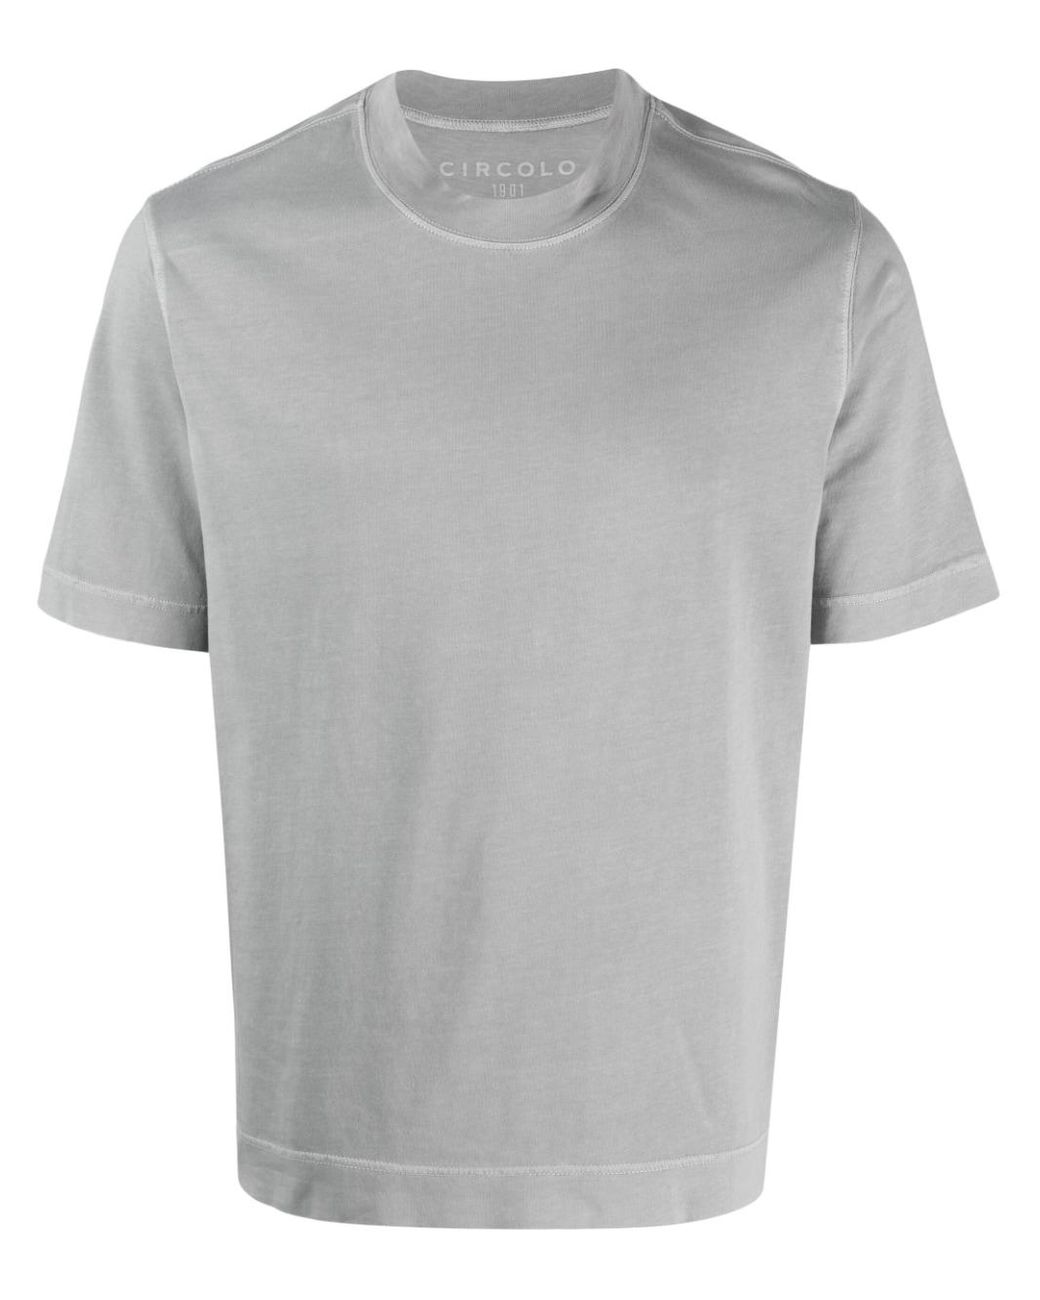 Circolo 1901 Plain Cotton T-shirt in Gray for Men | Lyst